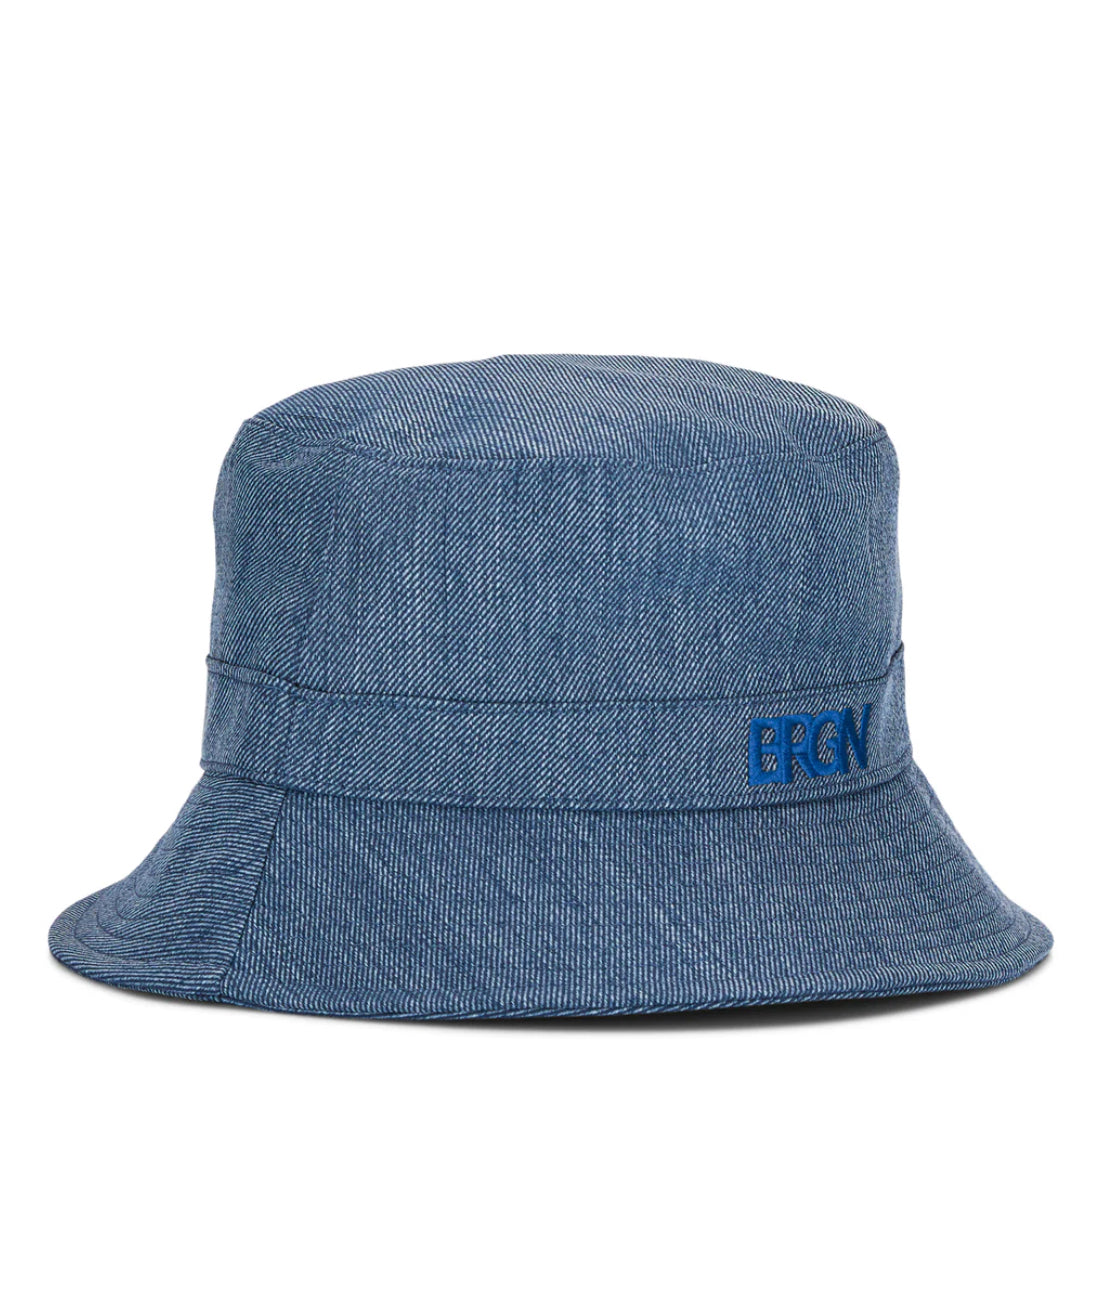 BRGN bucket hat